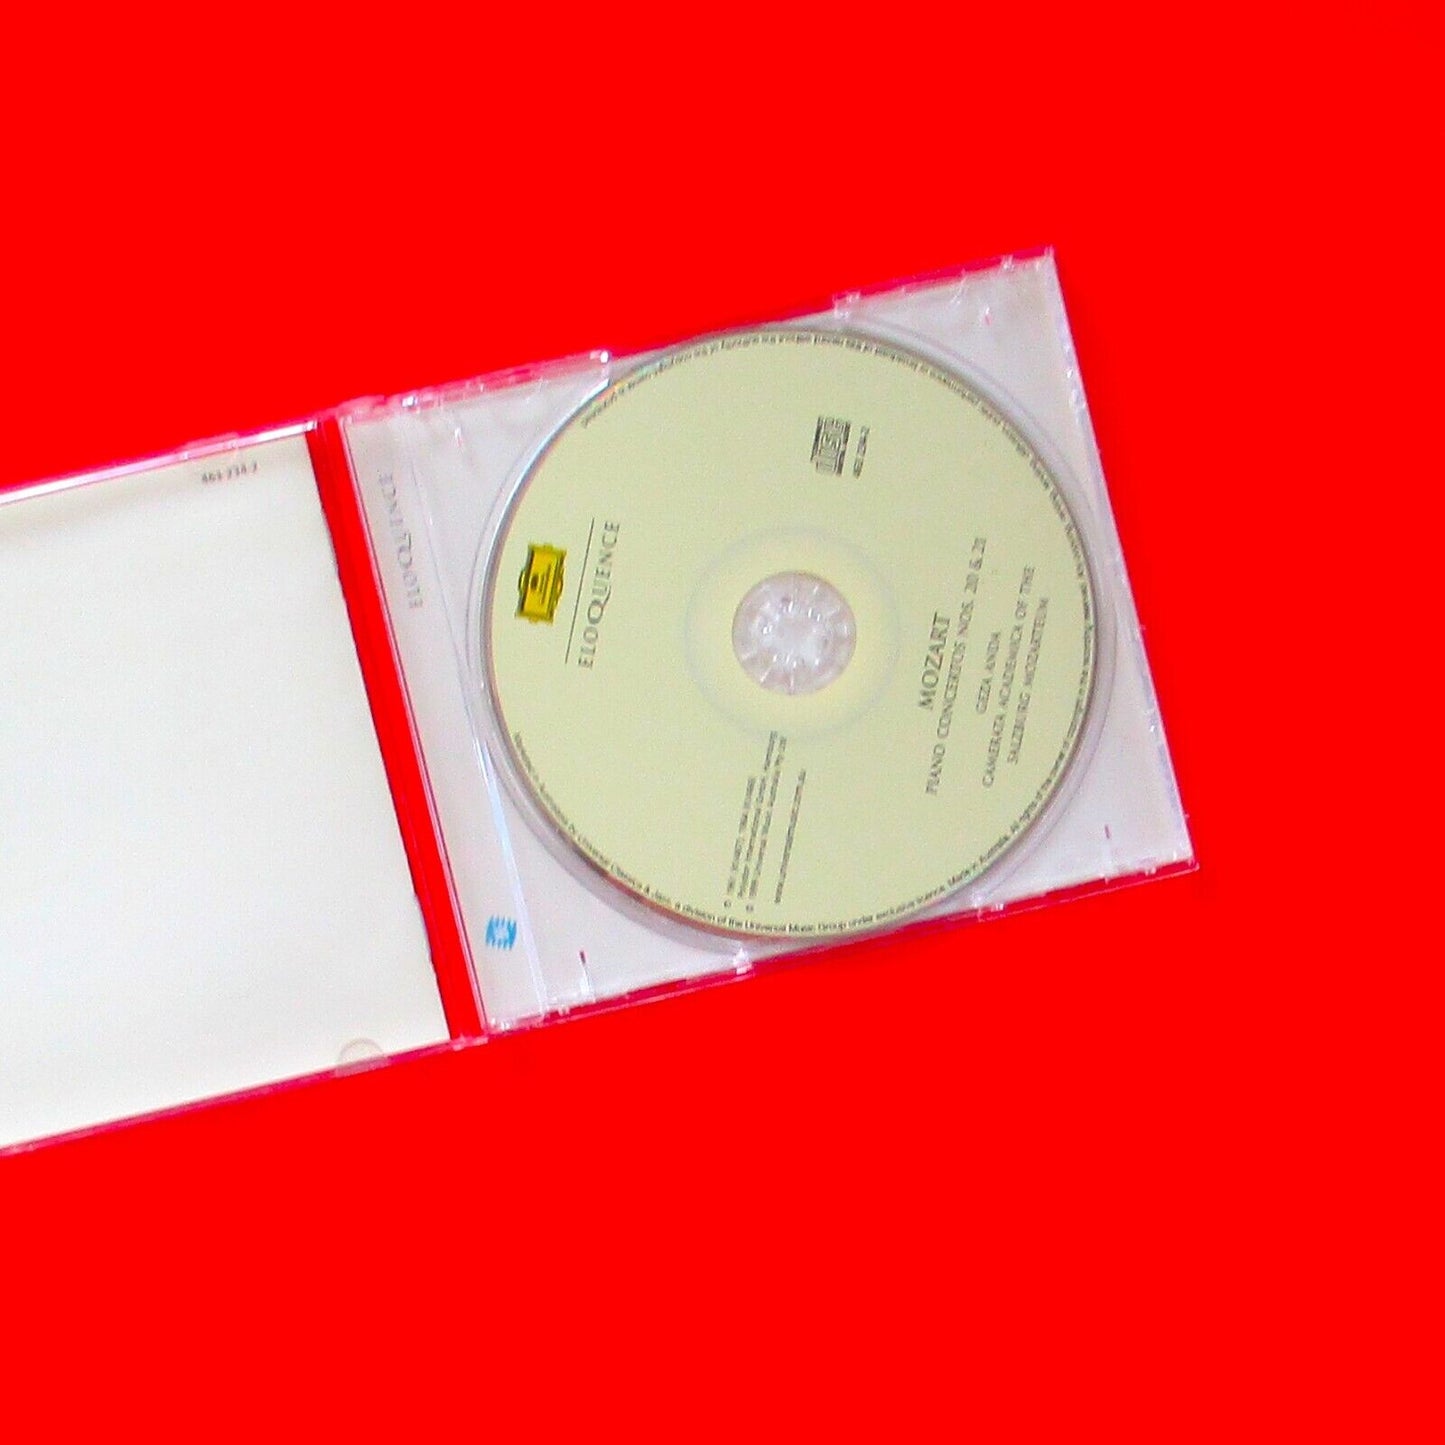 Mozart Piano Concertos Nos. 24 & 25 1999 CD Album SBS Deutsche Grammophon ‎